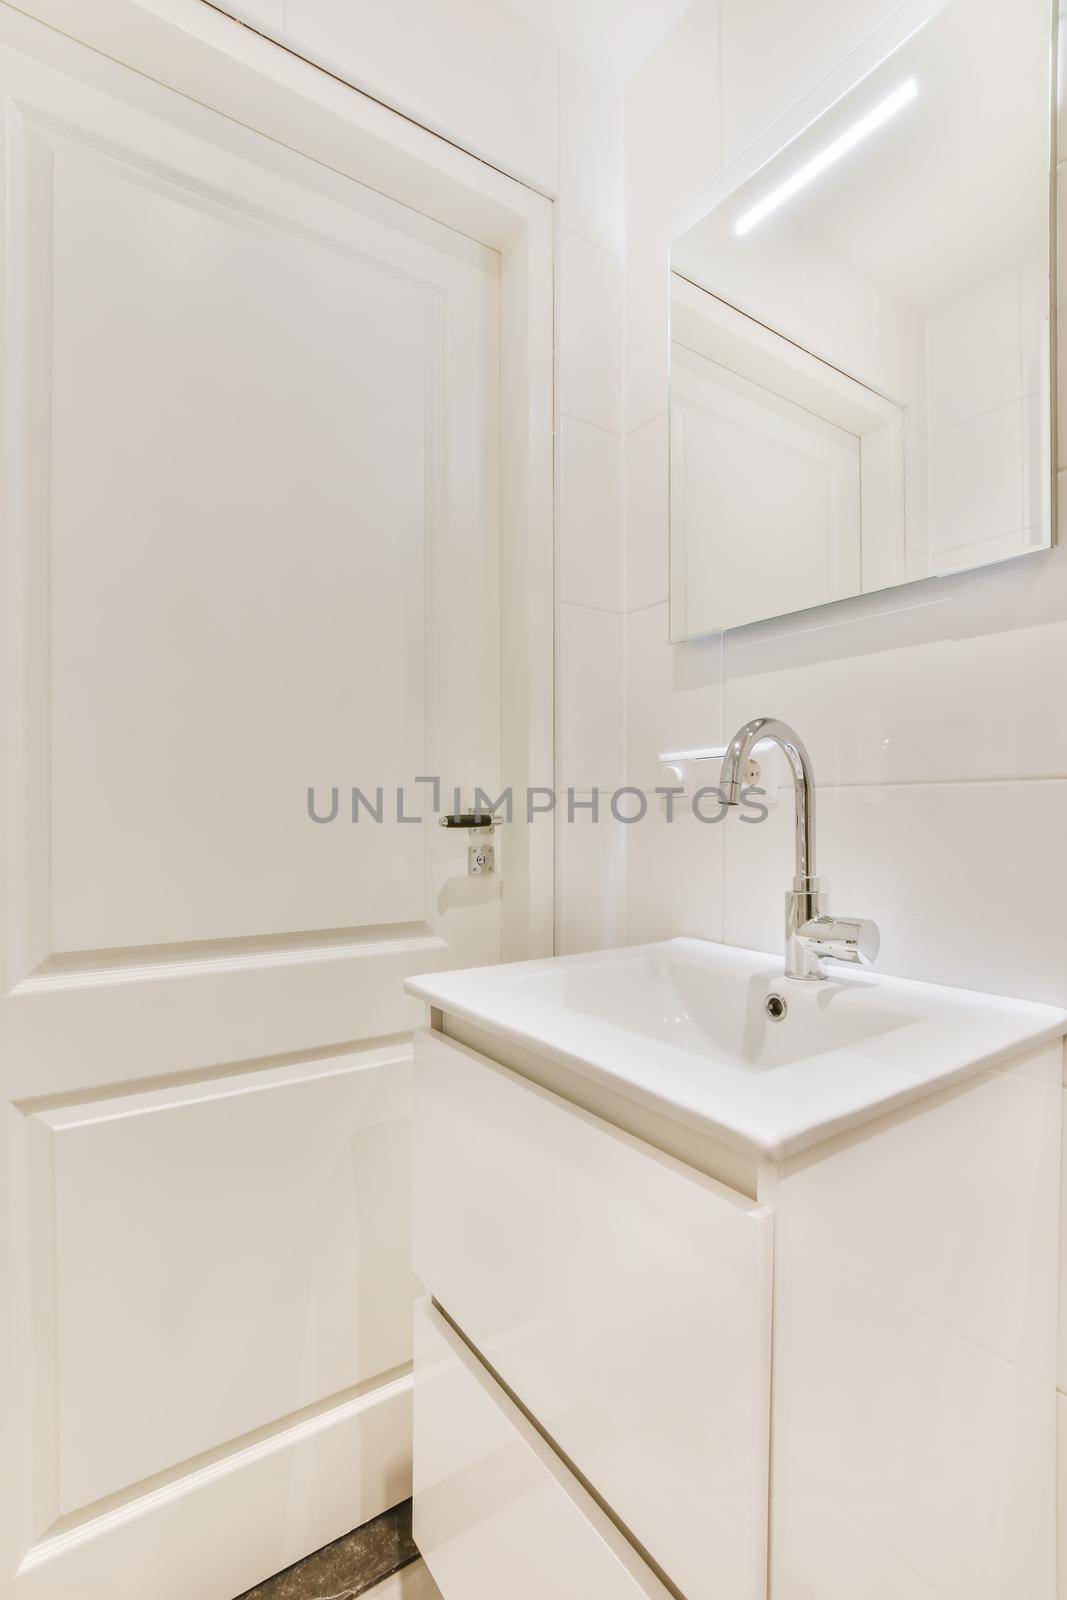 An all-white bathroom by casamedia